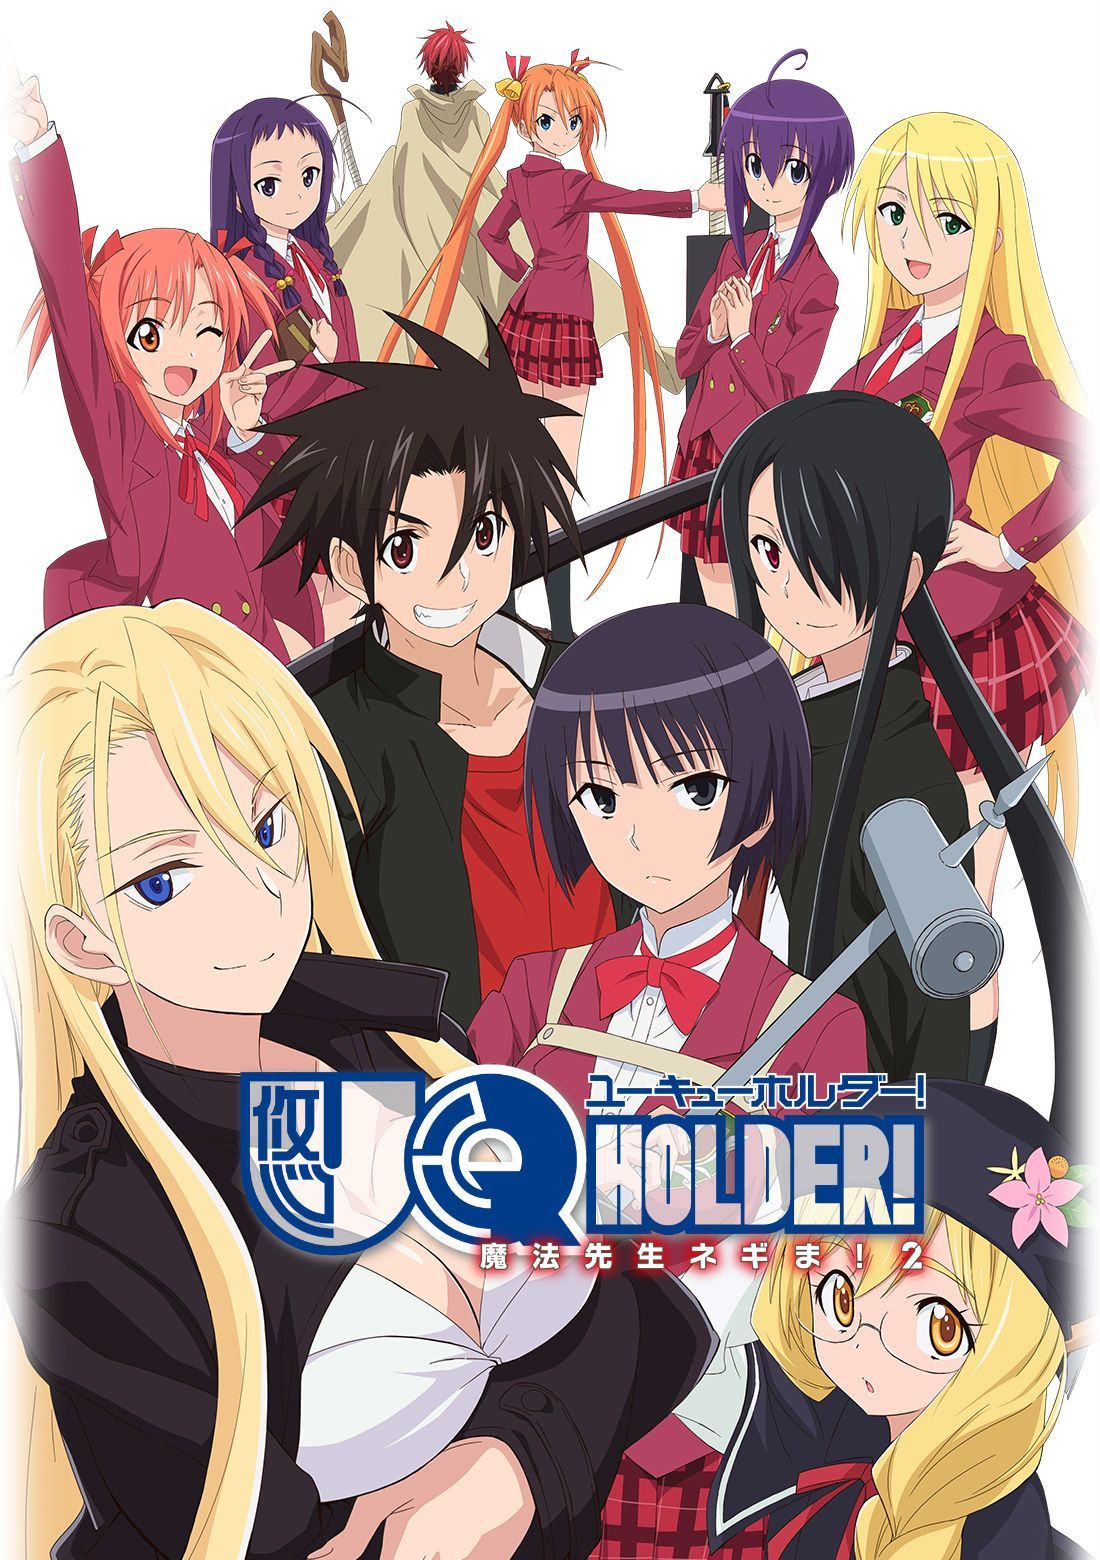 UQ Holder ideas. holder, anime, manga